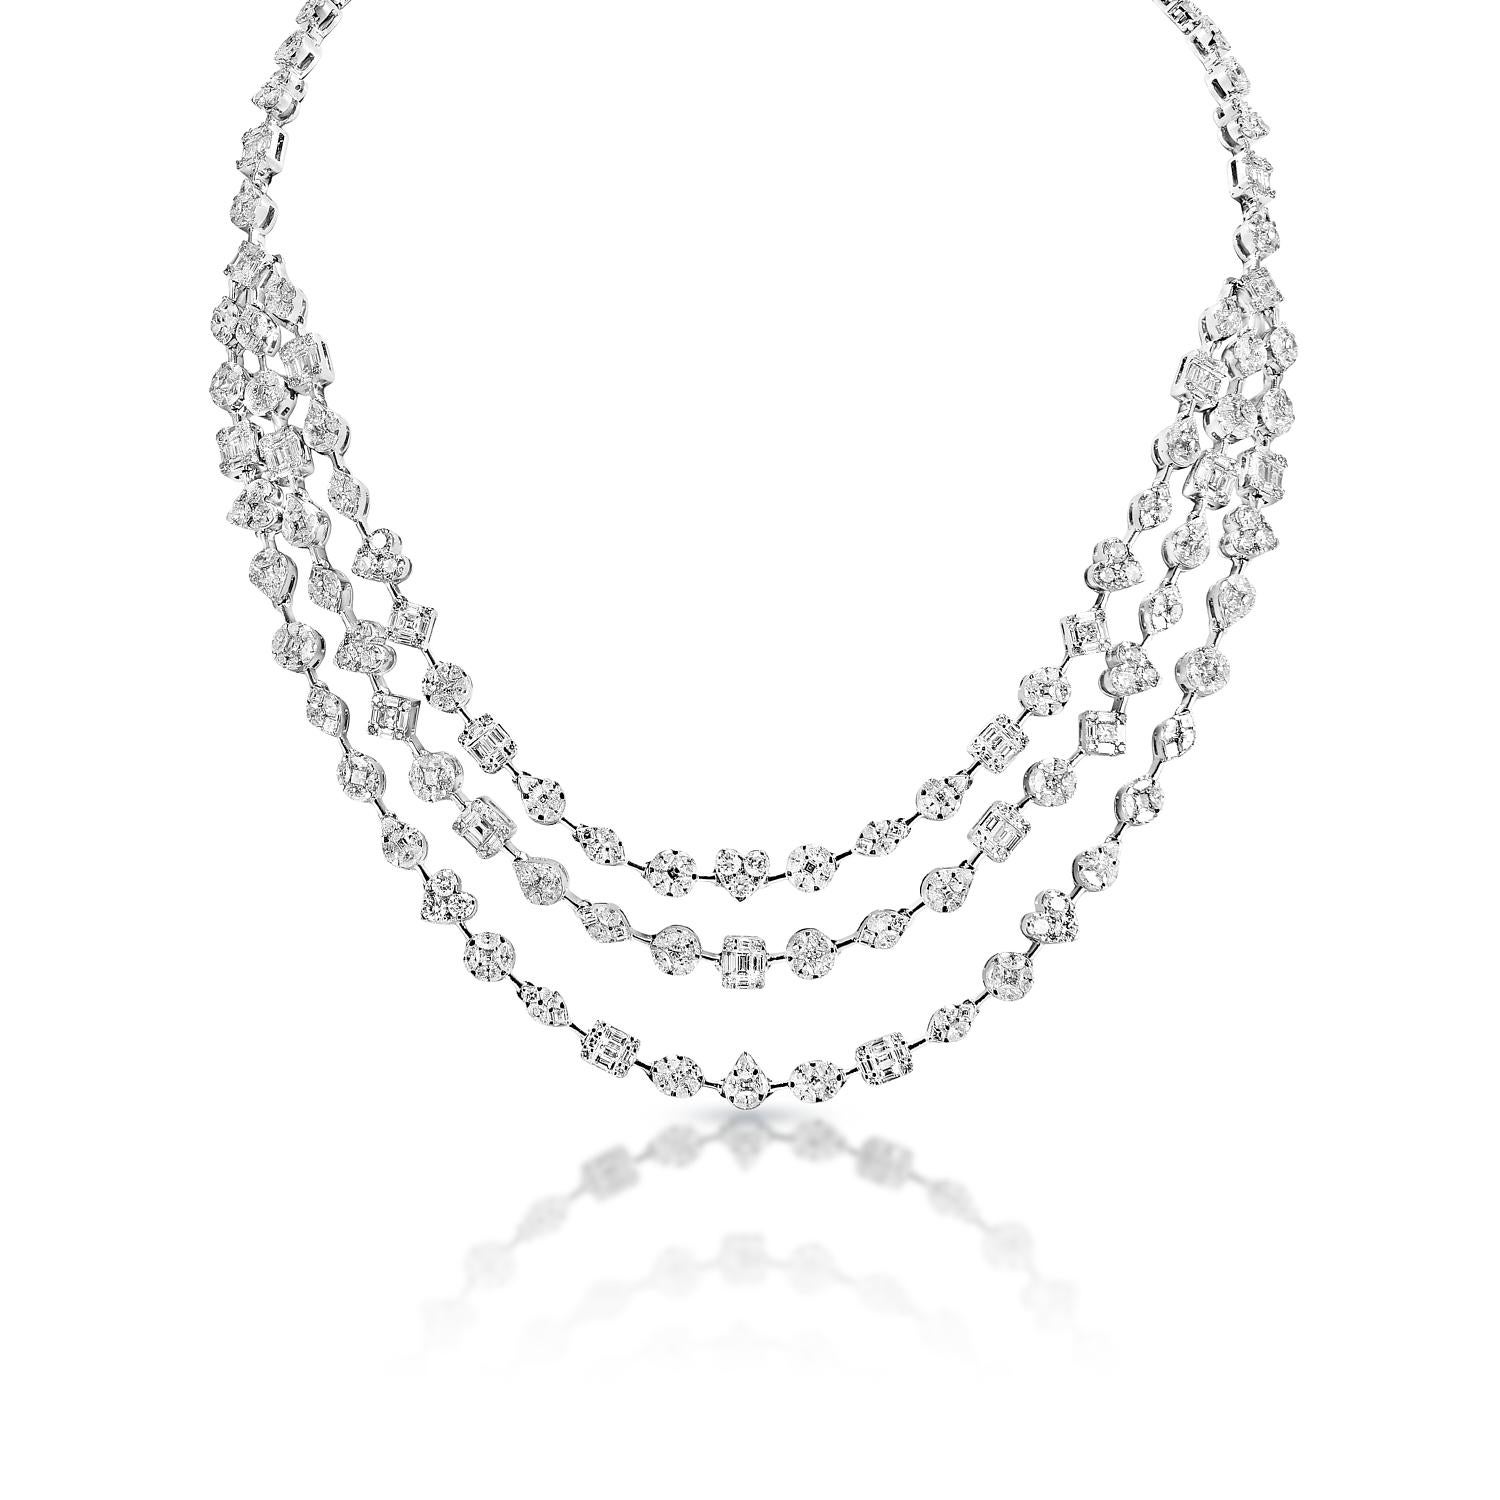 Diamond Multi-Strand Necklace:

Carat Weight: 25.86 Carats
Style: Combine Mix Shape
Chains: 14 Karat White Gold 66.60 grams